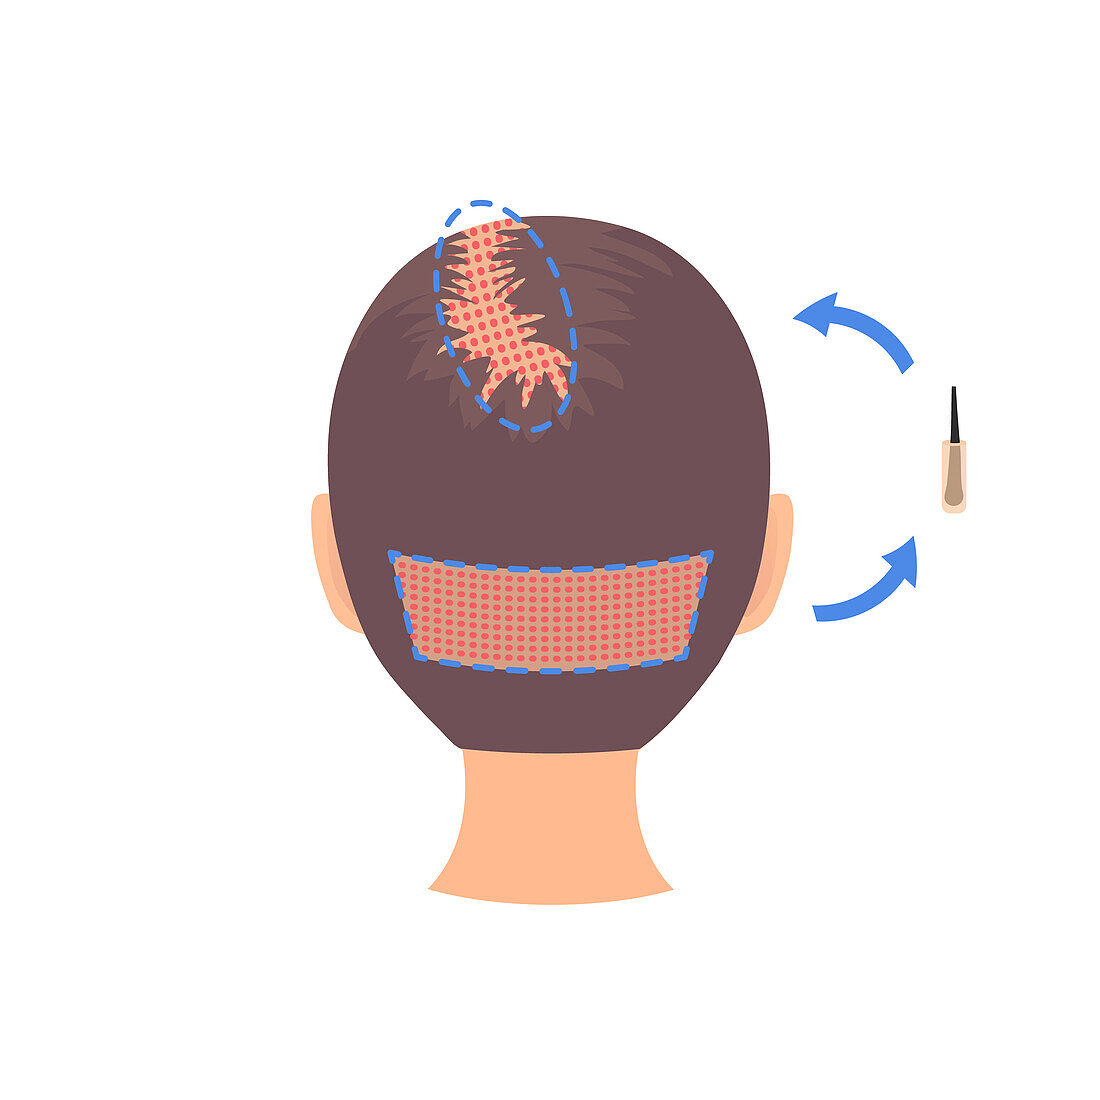 FUE hair transplantation, conceptual illustration